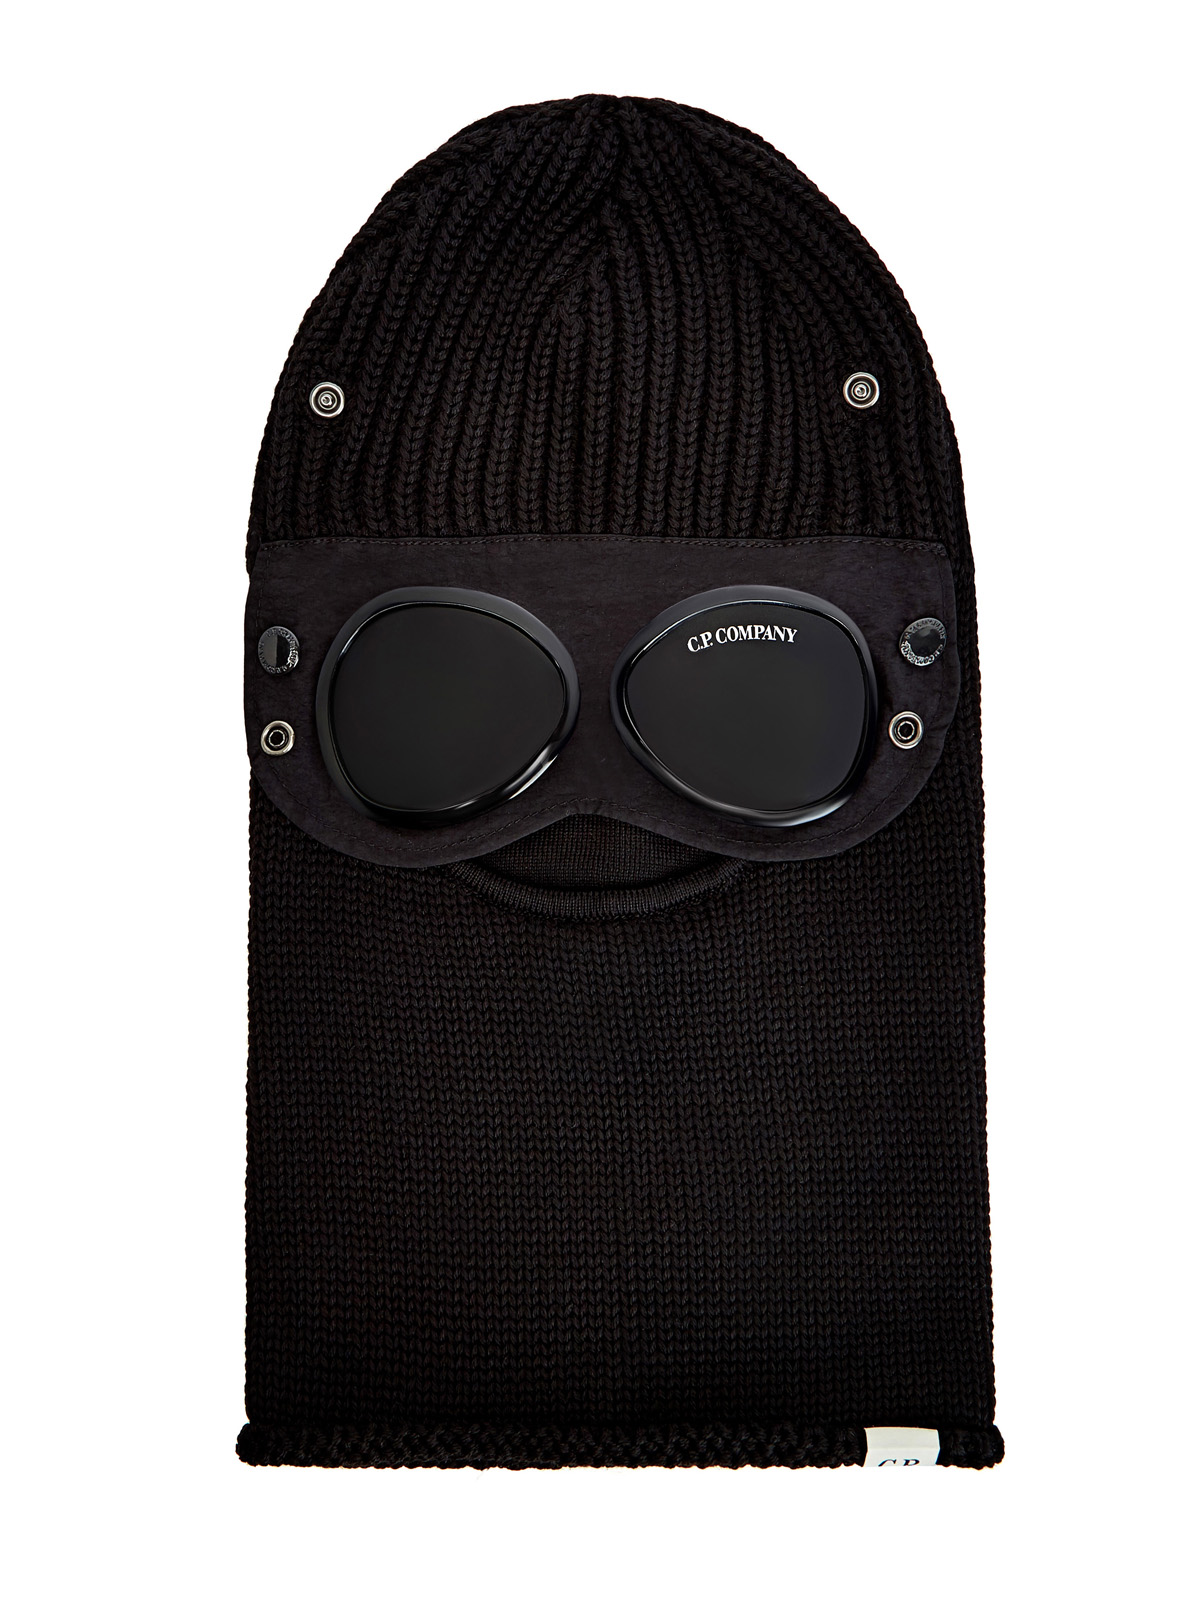 Шапка-балаклава Goggles из шерсти мериноса C.P.COMPANY, цвет черный, размер 50;52;54;56;46